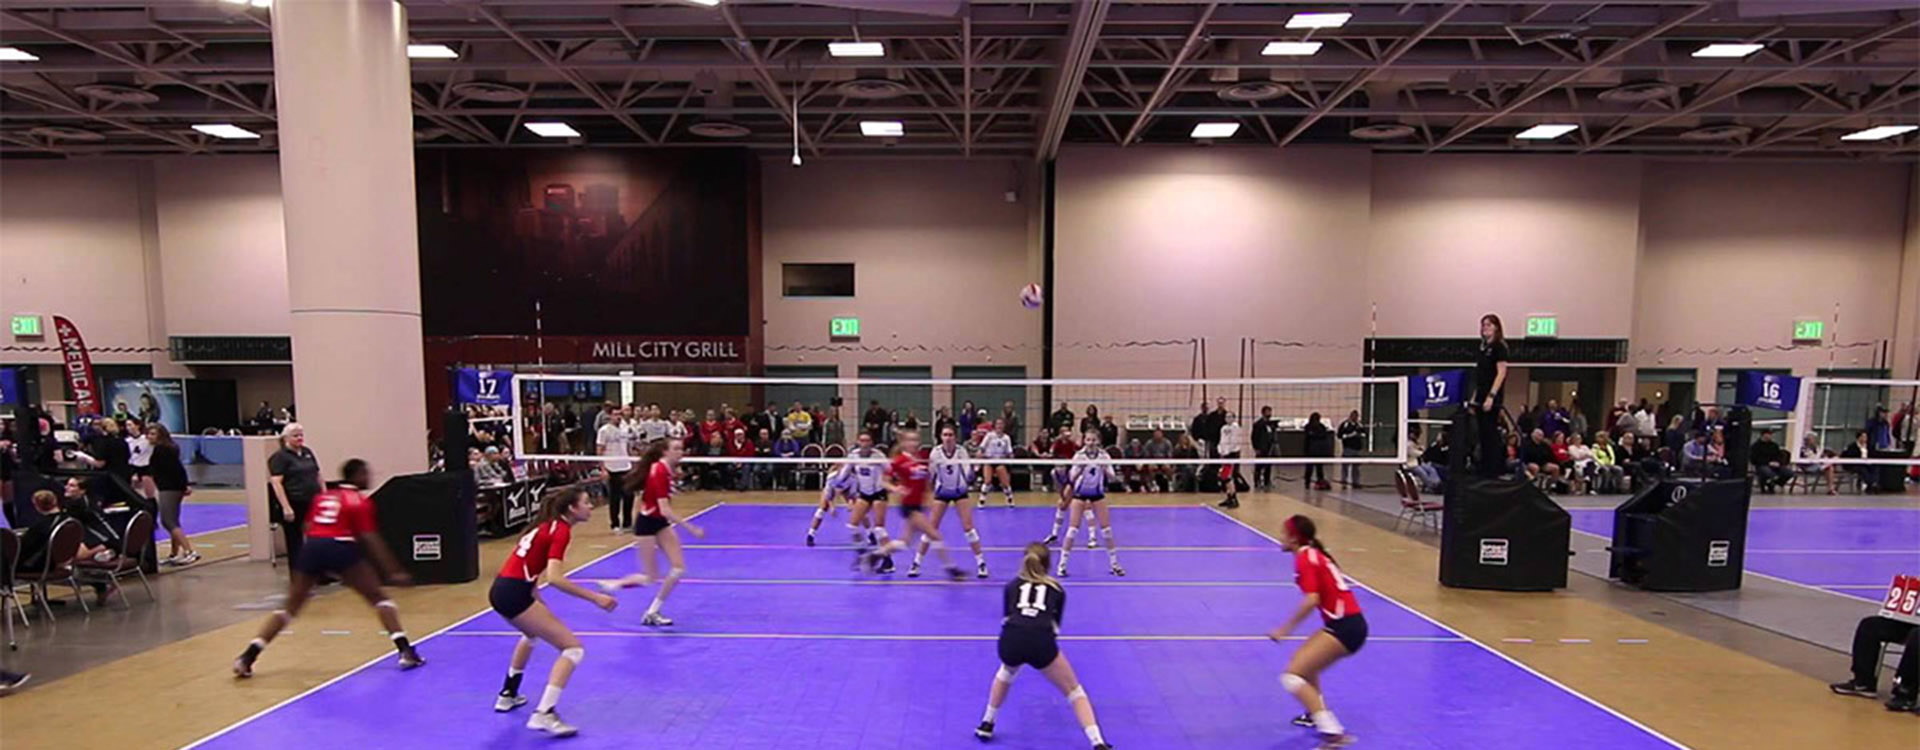 Volleyball Court-2